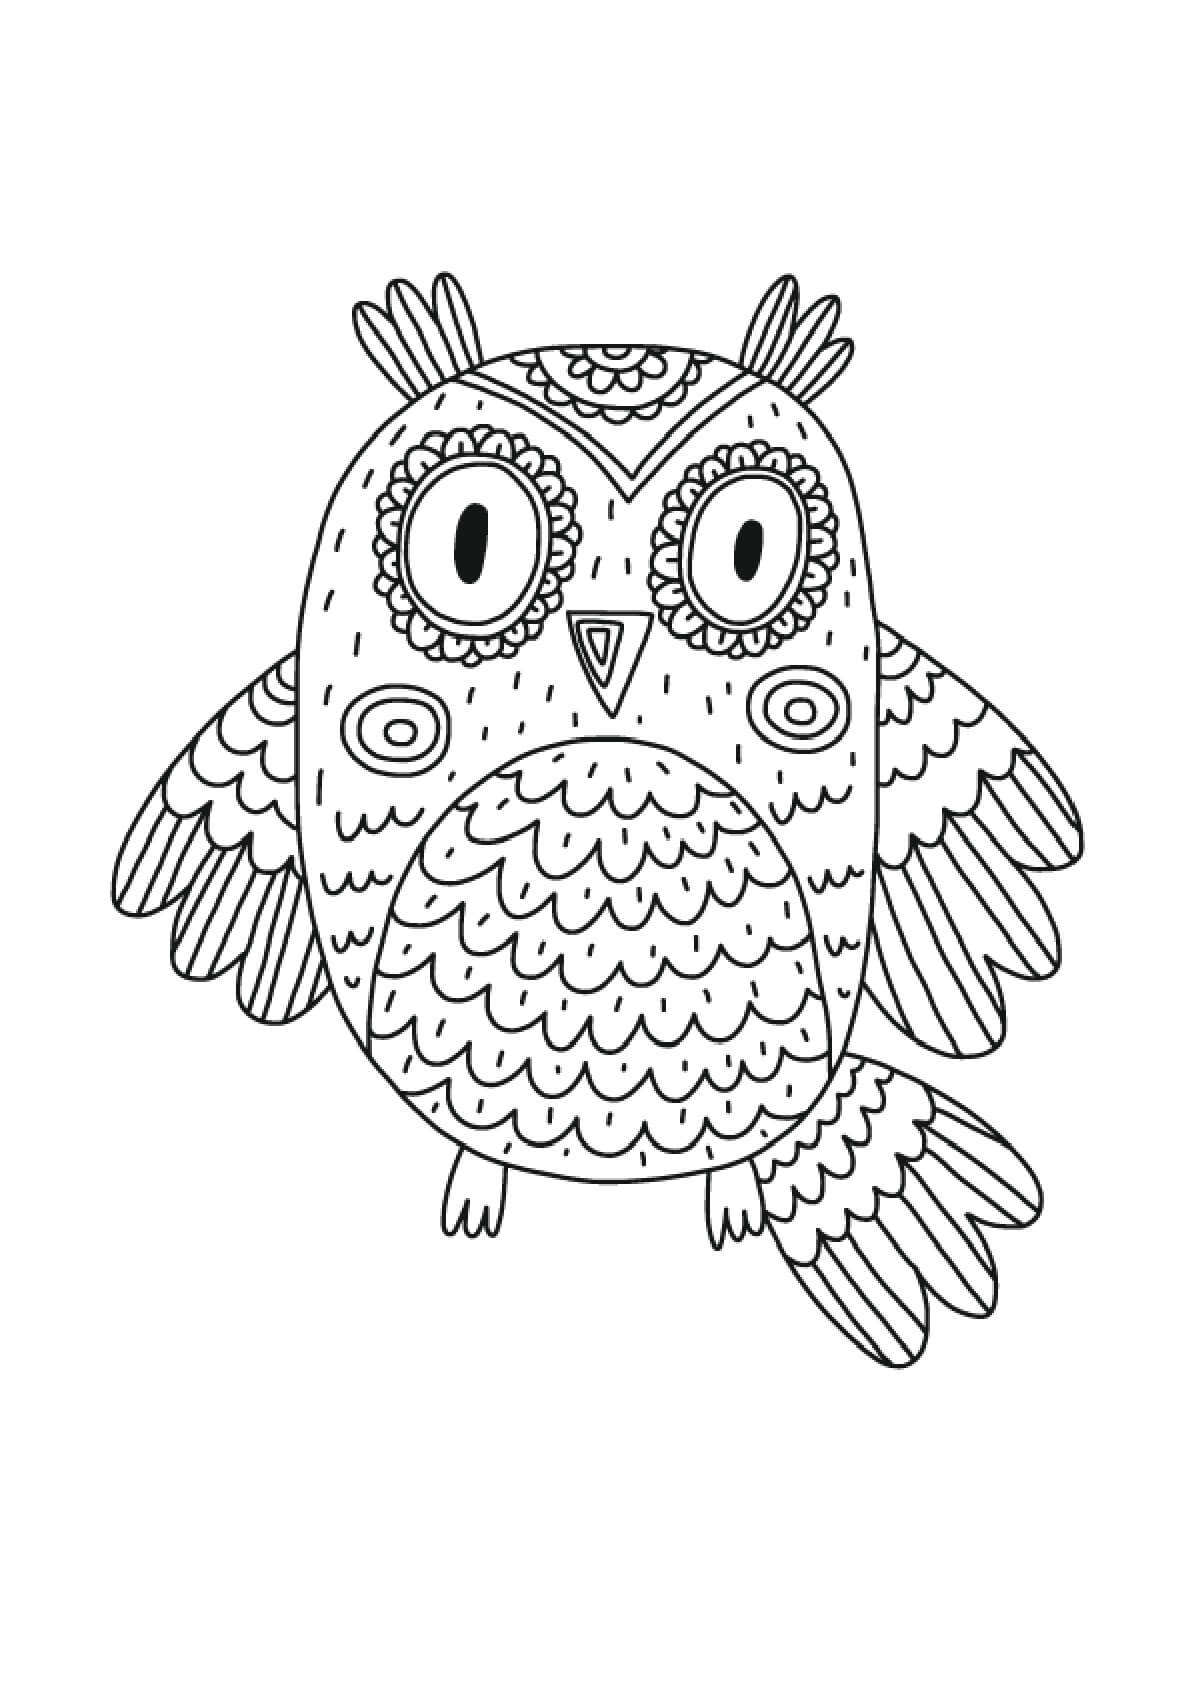 Mandala Owl Coloring Page - Sheet 7 Mandalas